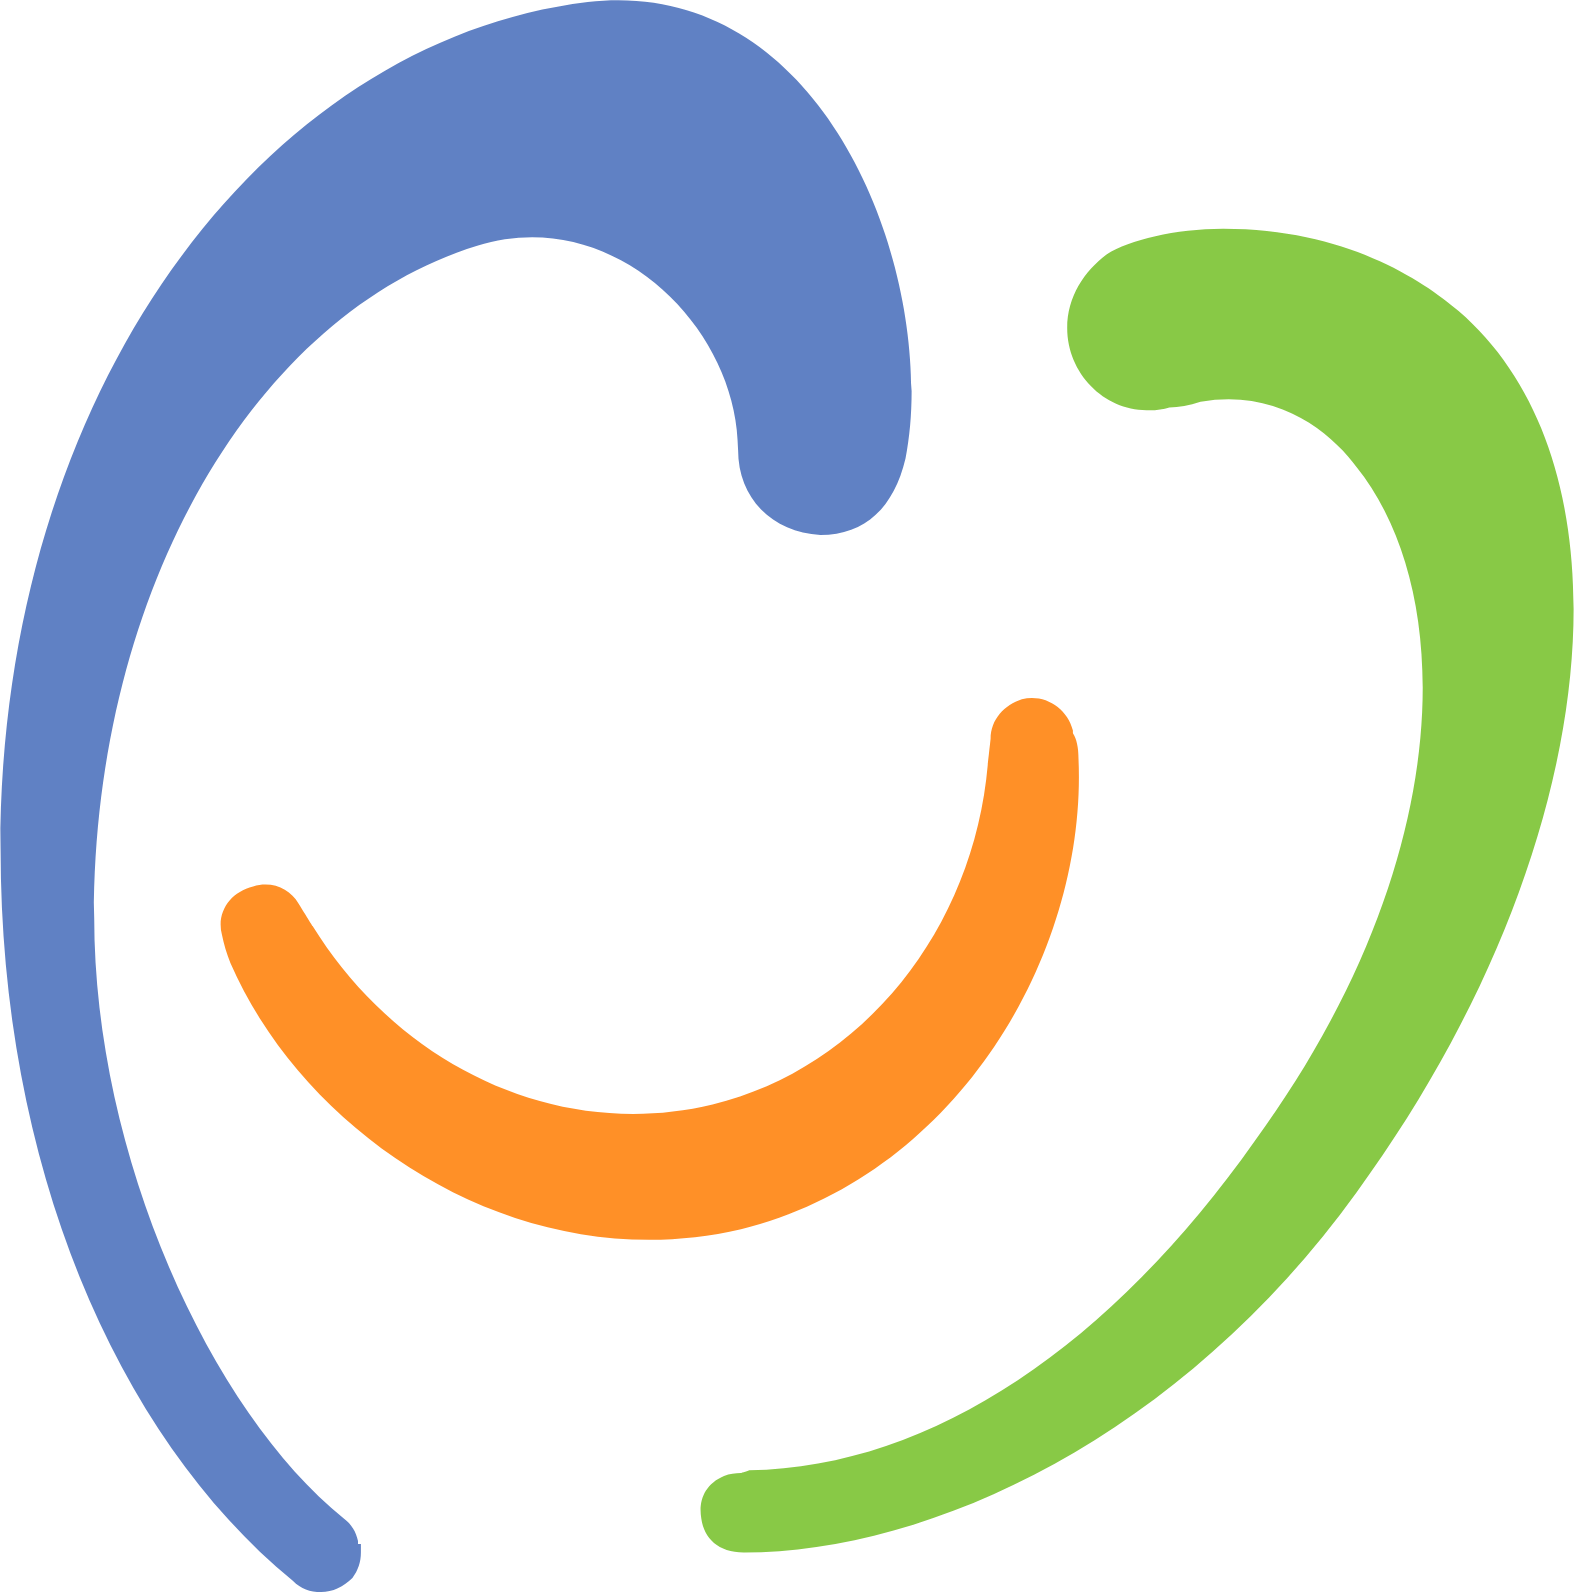 KYORIN Pharmaceutical logo (transparent PNG)